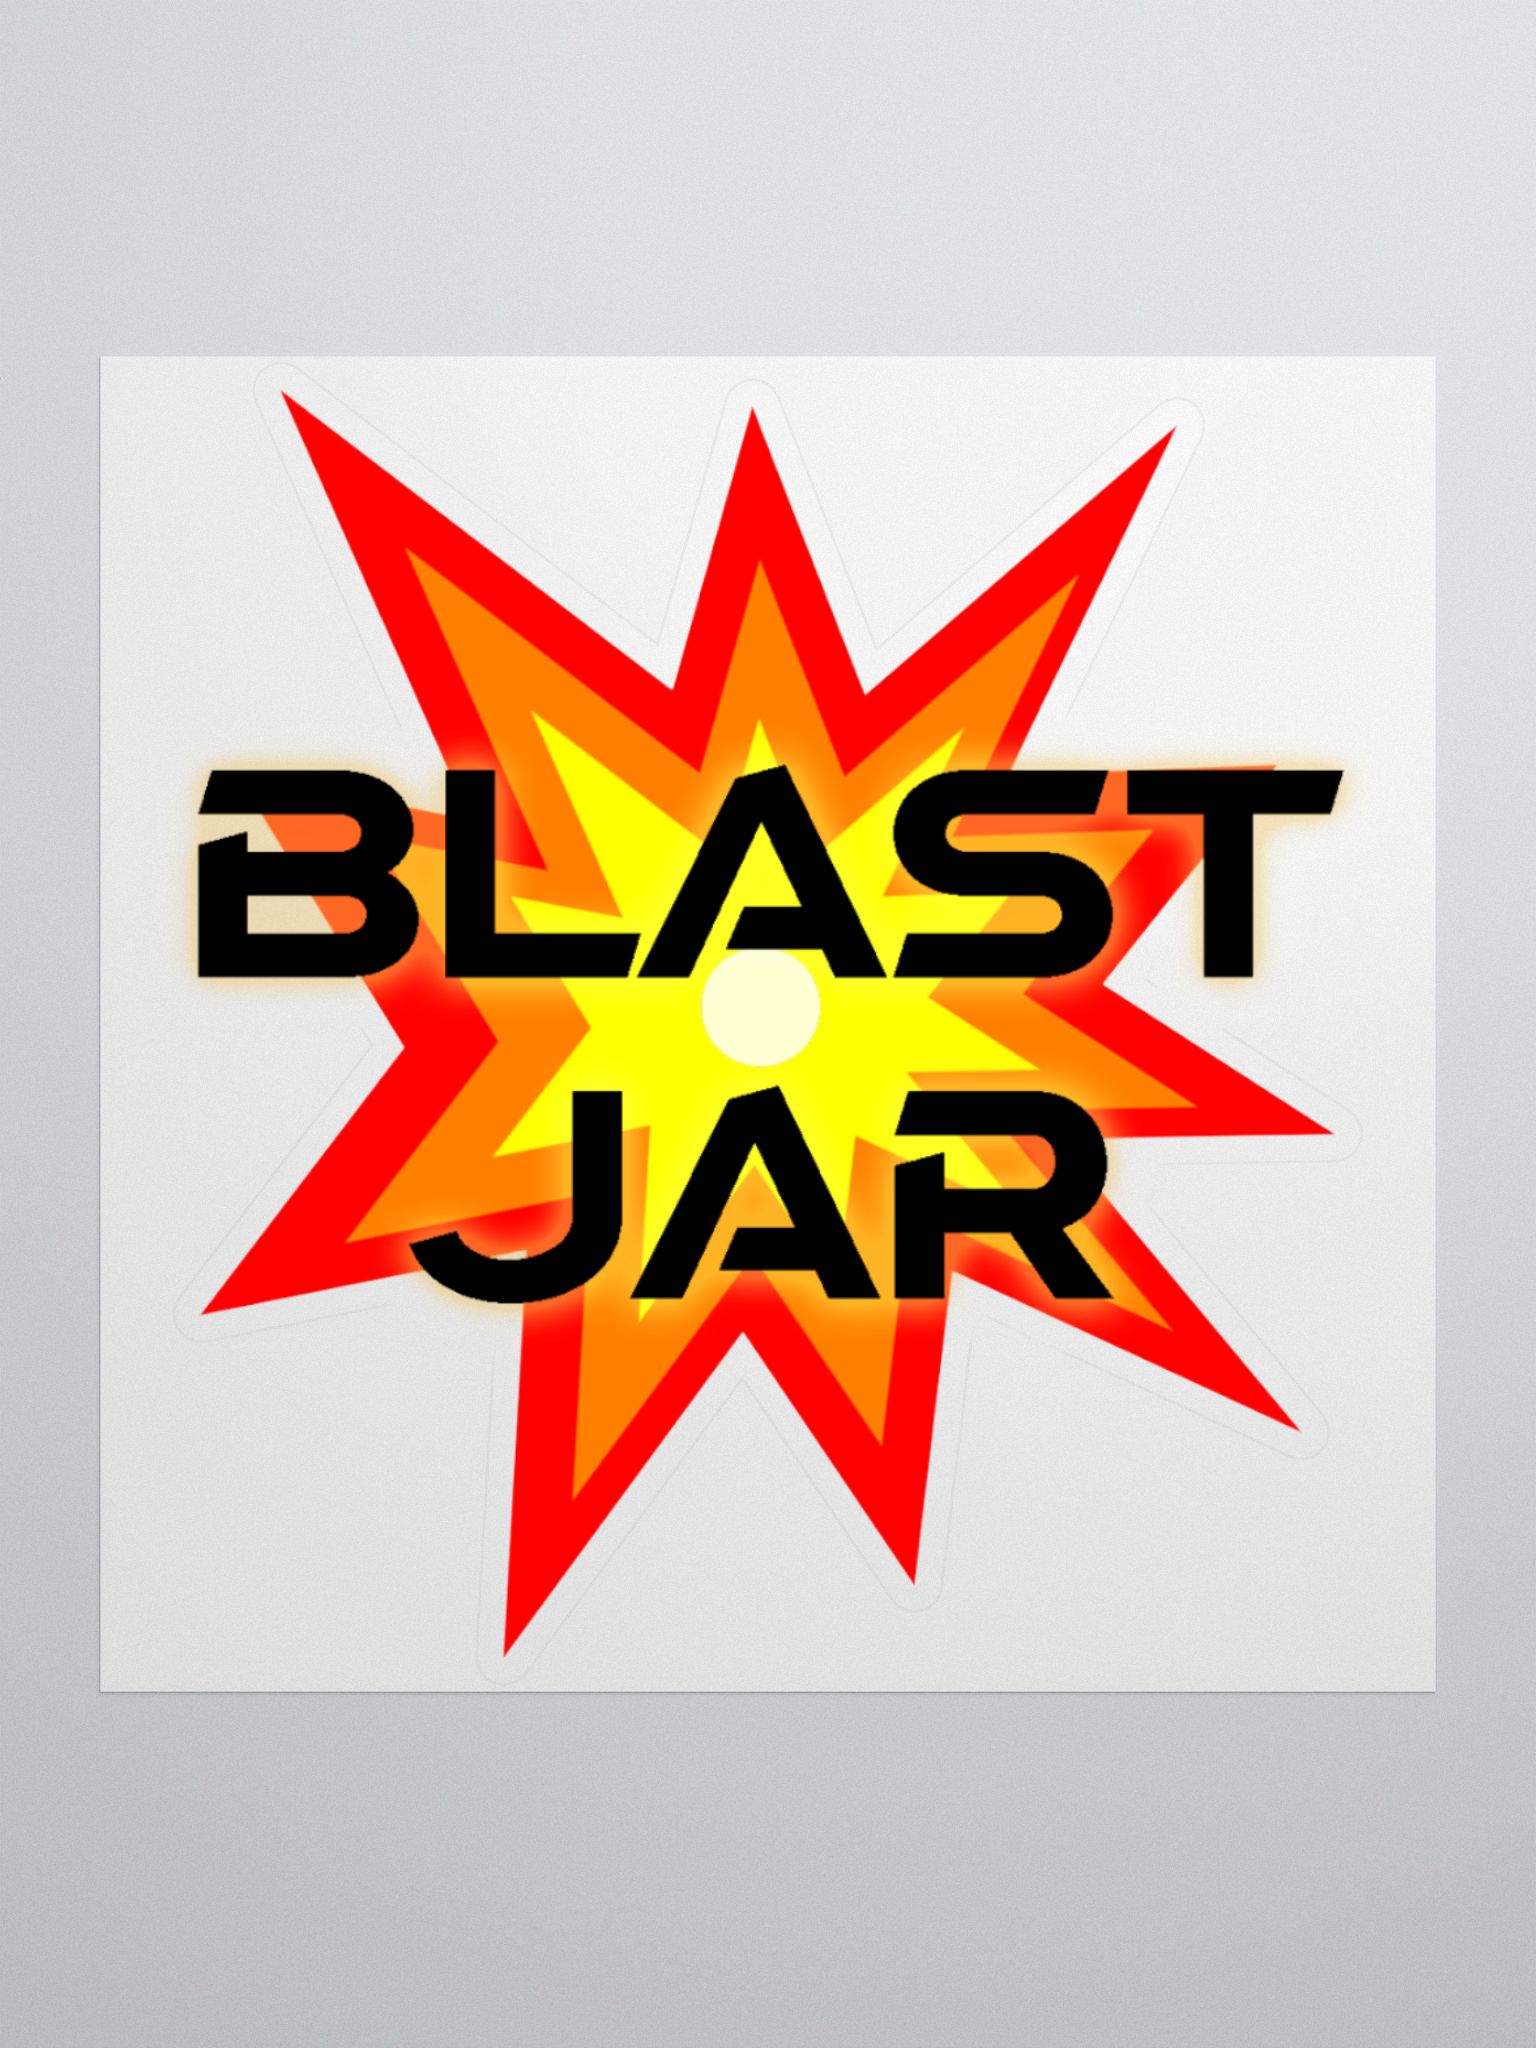 Baltimore Blast Logo PNG Transparent & SVG Vector - Freebie Supply